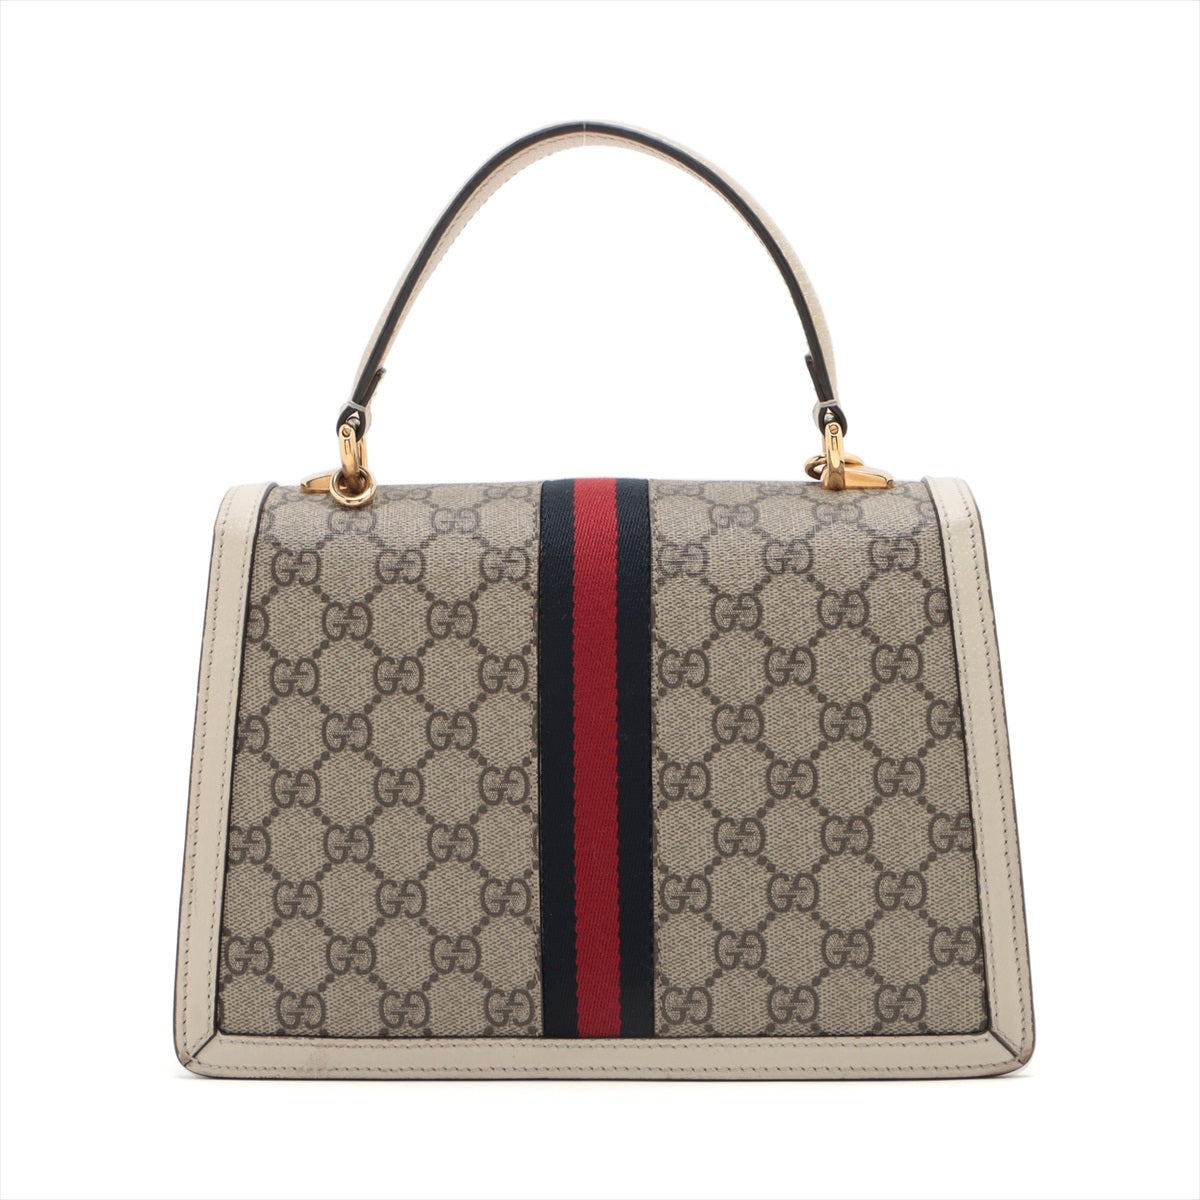 Gucci GG Supreme PVC & leather 2way handbag Beige x white 651055